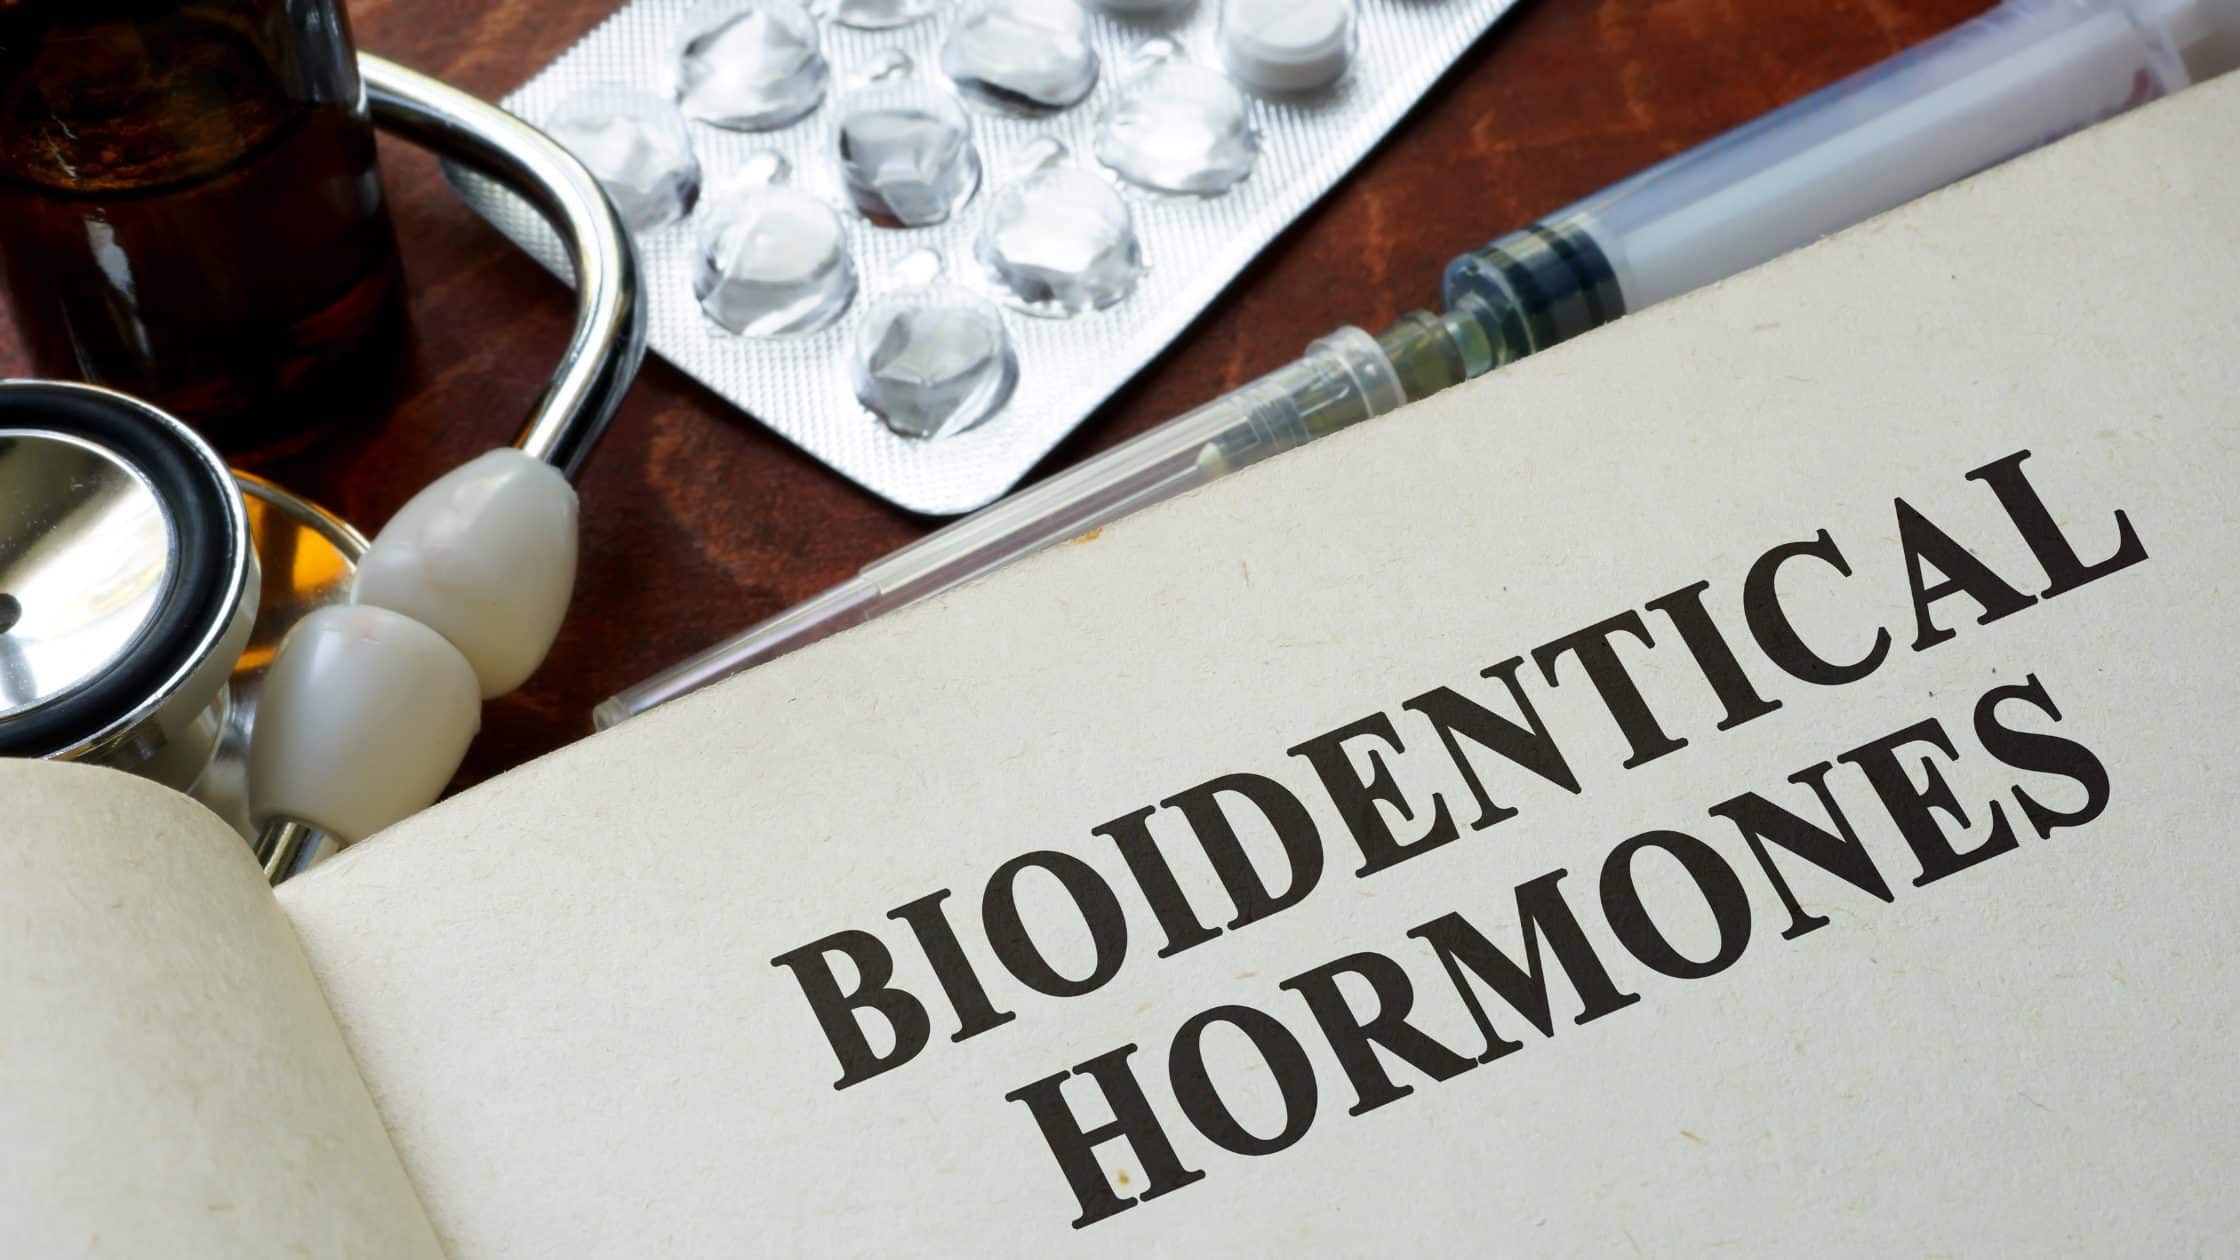 Bioidentical hormones written on a paper